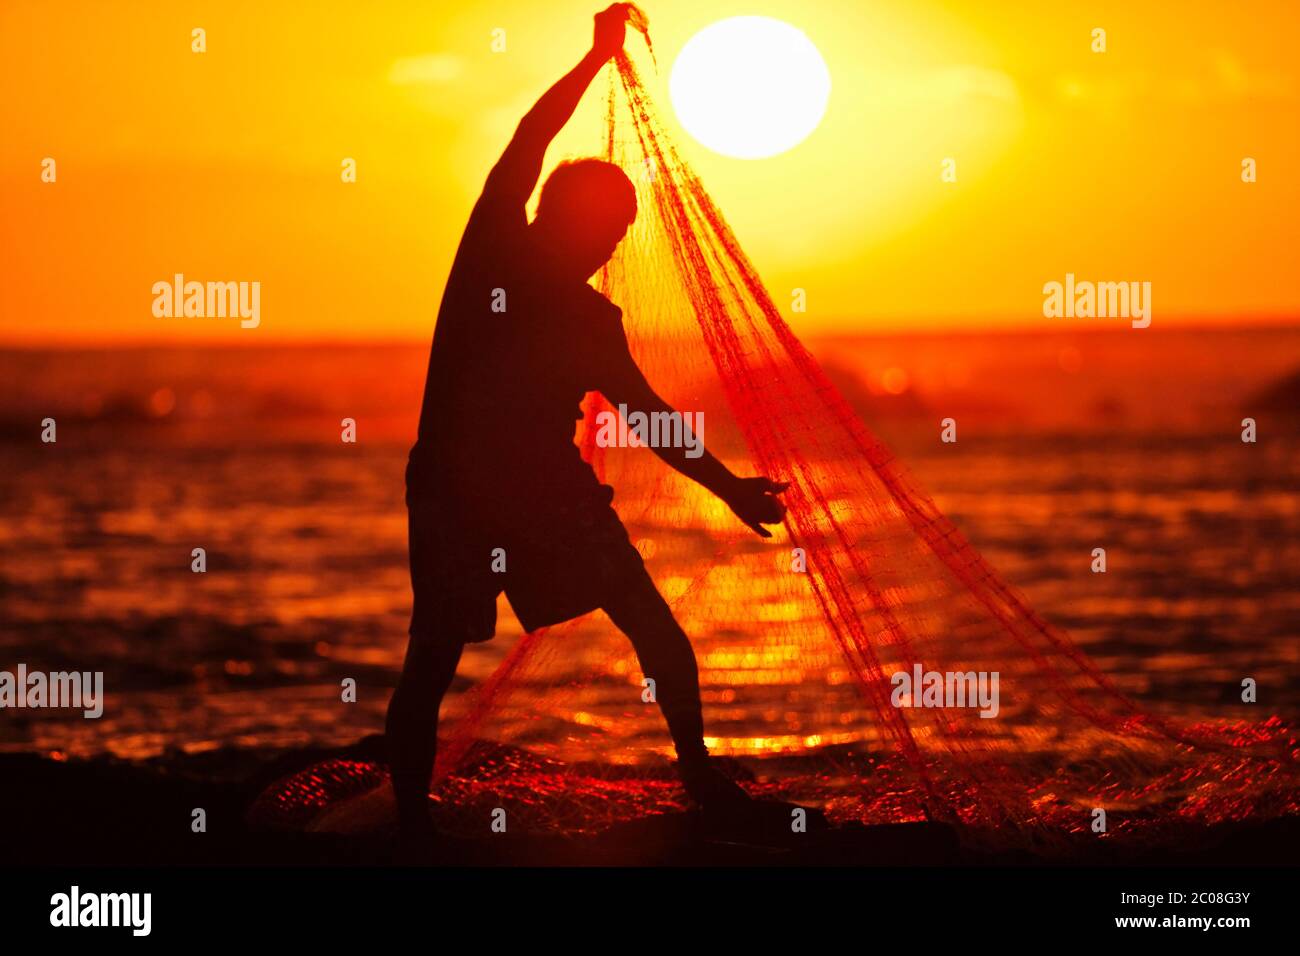 Hawaiian Fisherman (model released) hauls in his fishing net at sunset in Keauhou, Hawaii Stock Photo